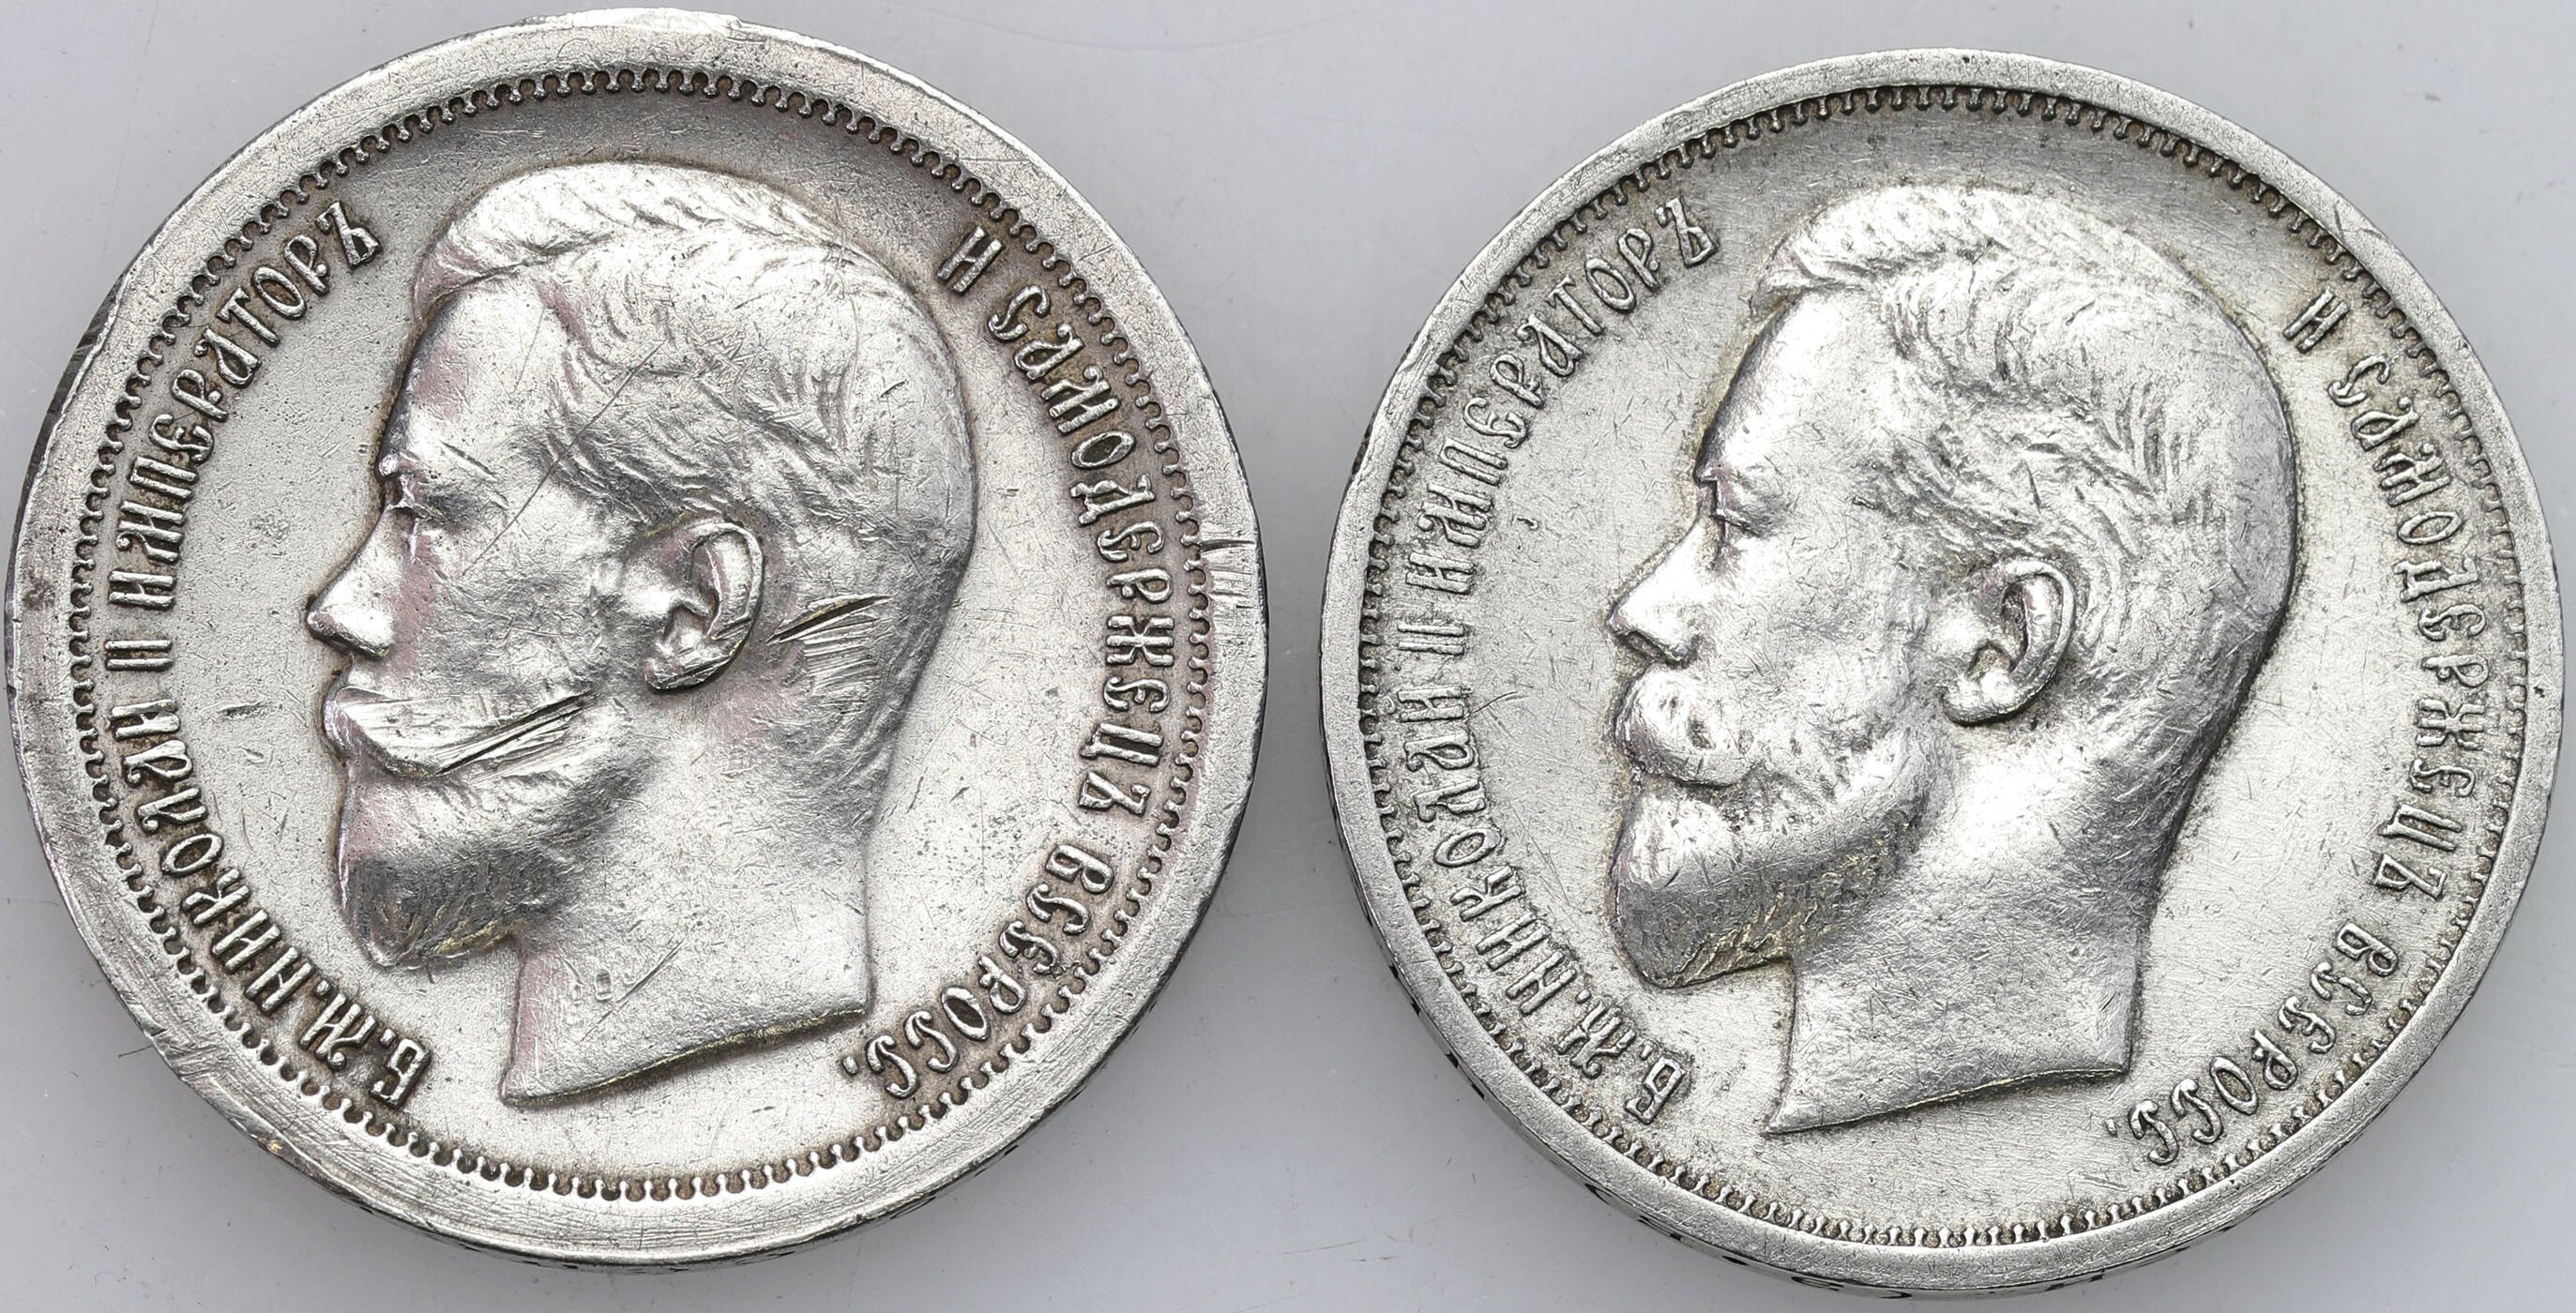  Rosja. Mikołaj II. 50 kopiejek (1/2 rubla) 1897 ★, Paryż i 1912 ЭБ, Petersburg